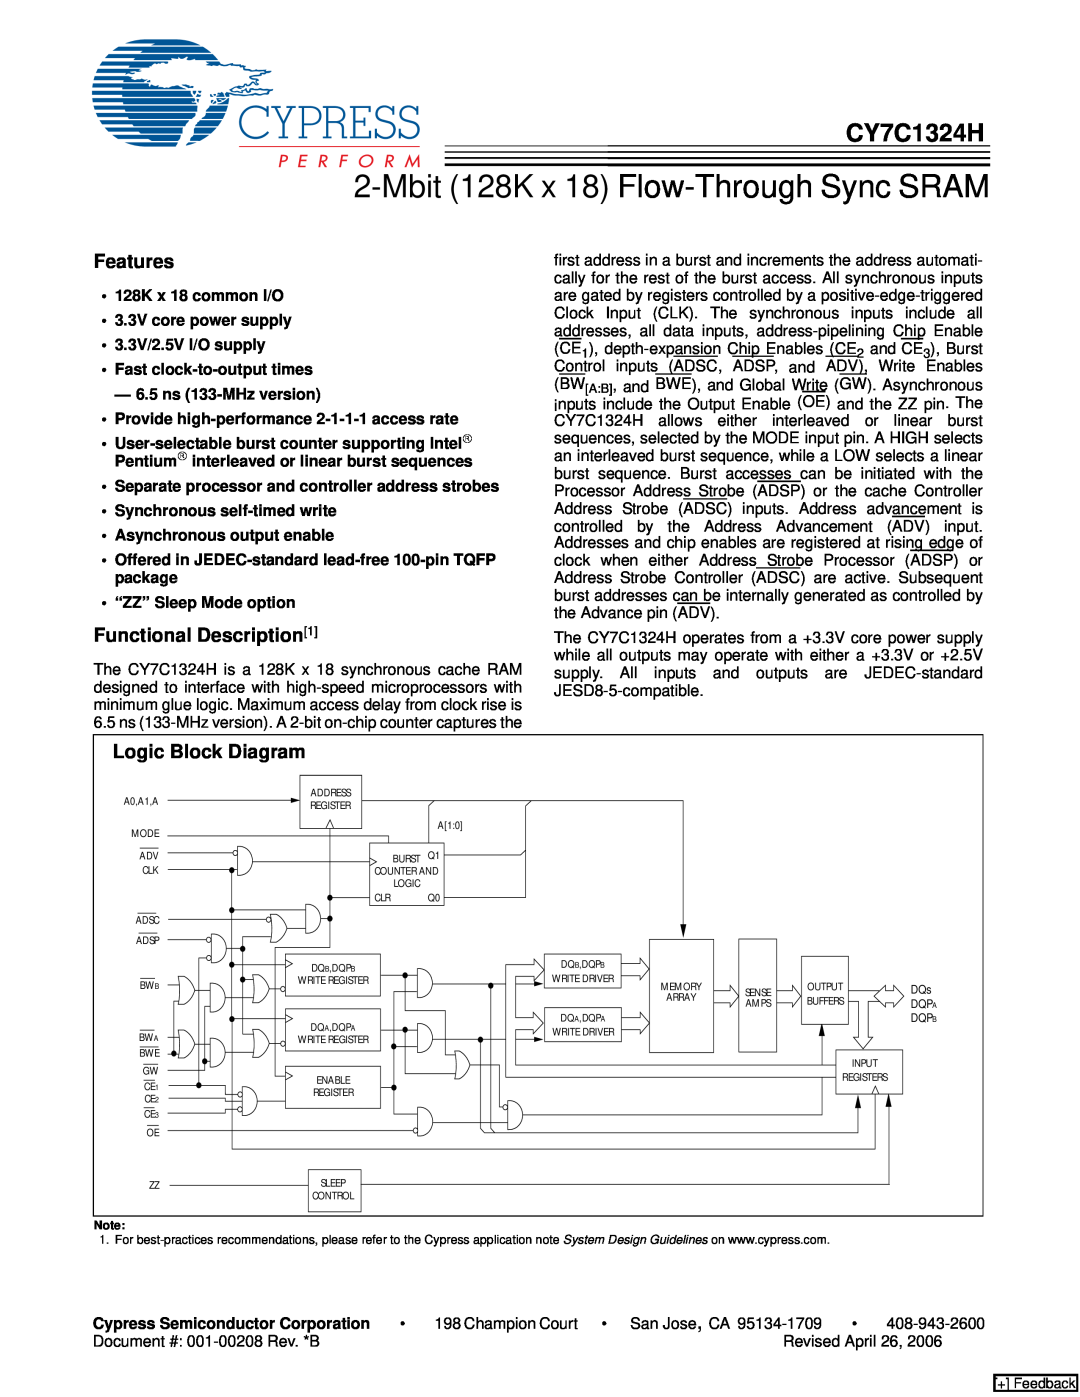 Cypress CY7C1324H manual Features, Functional Description1, Logic Block Diagram, Mbit 128K x 18 Flow-Through Sync SRAM 